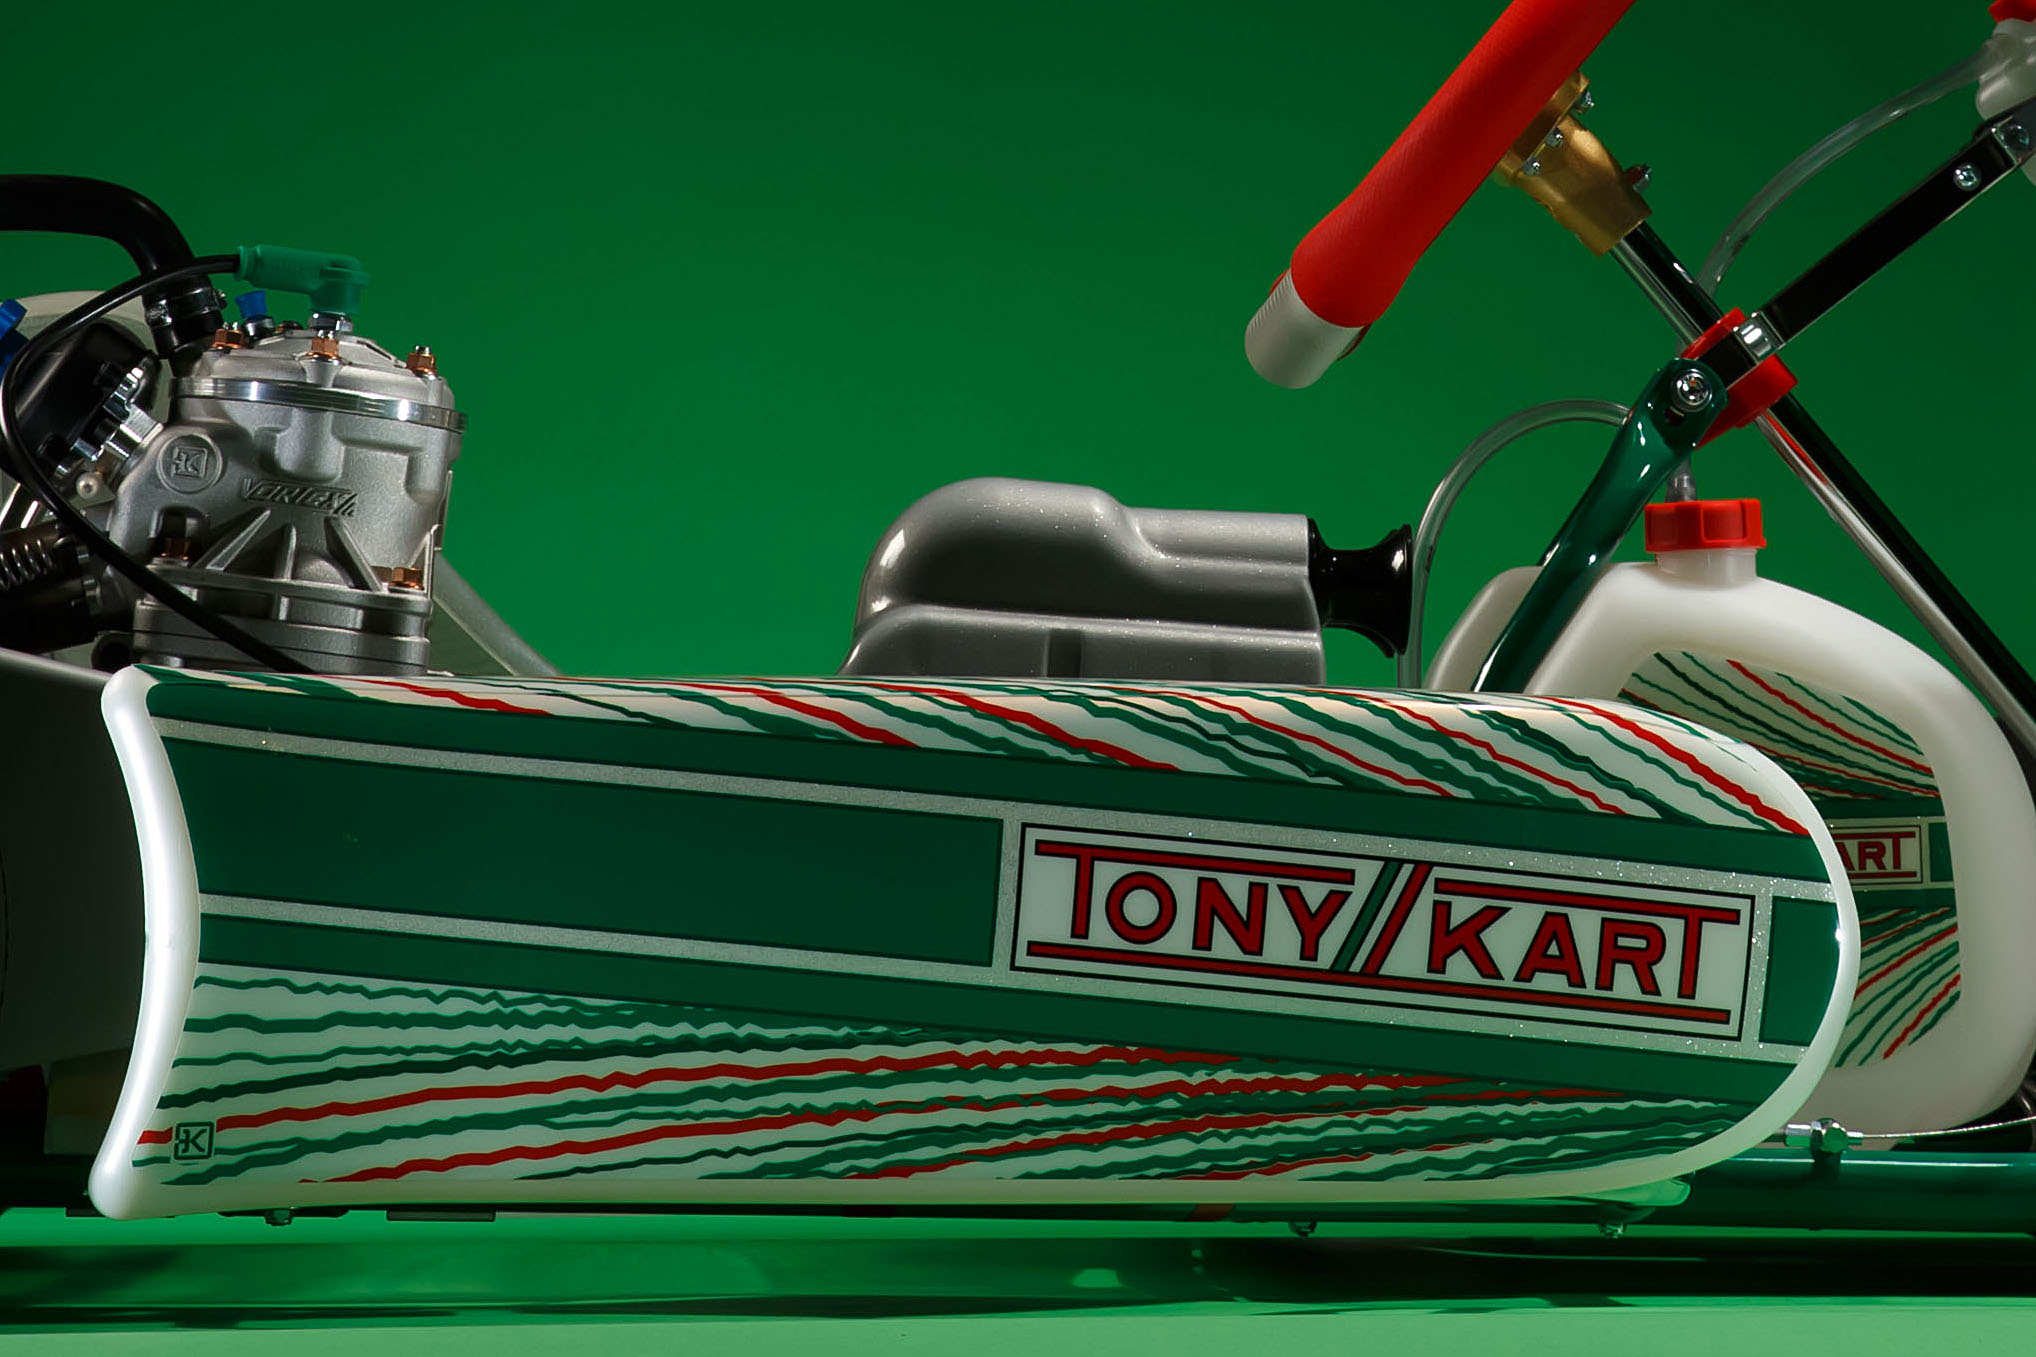 TonyKart Racer 401RR  Rotax + OK + OKJ + X30 + X30jun + Tillotson T4 + Honda Rookie + Rot 